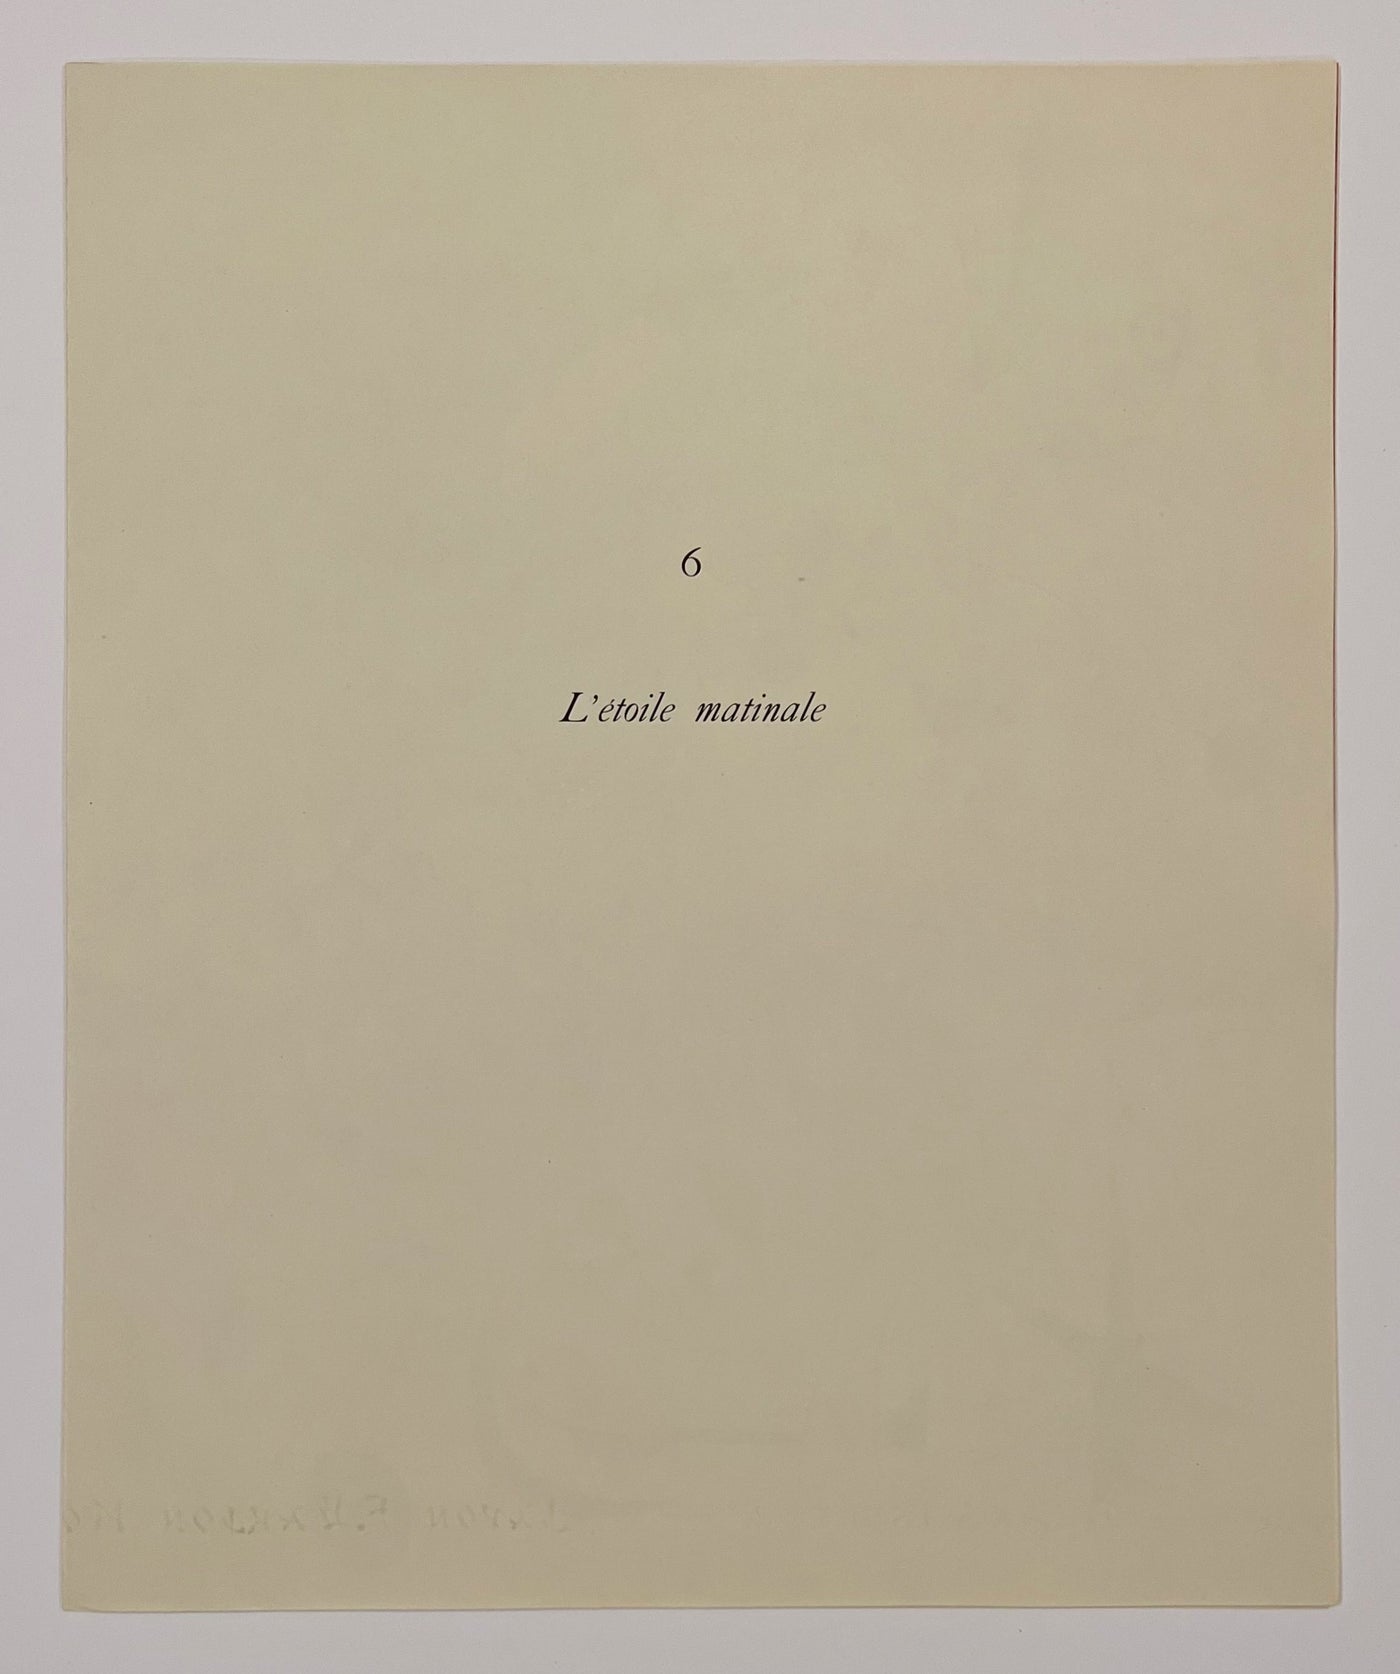 Joan Miro (after) L'etoile mantinale (Morning Star), Plate VI (Cramer No. 58) 1959